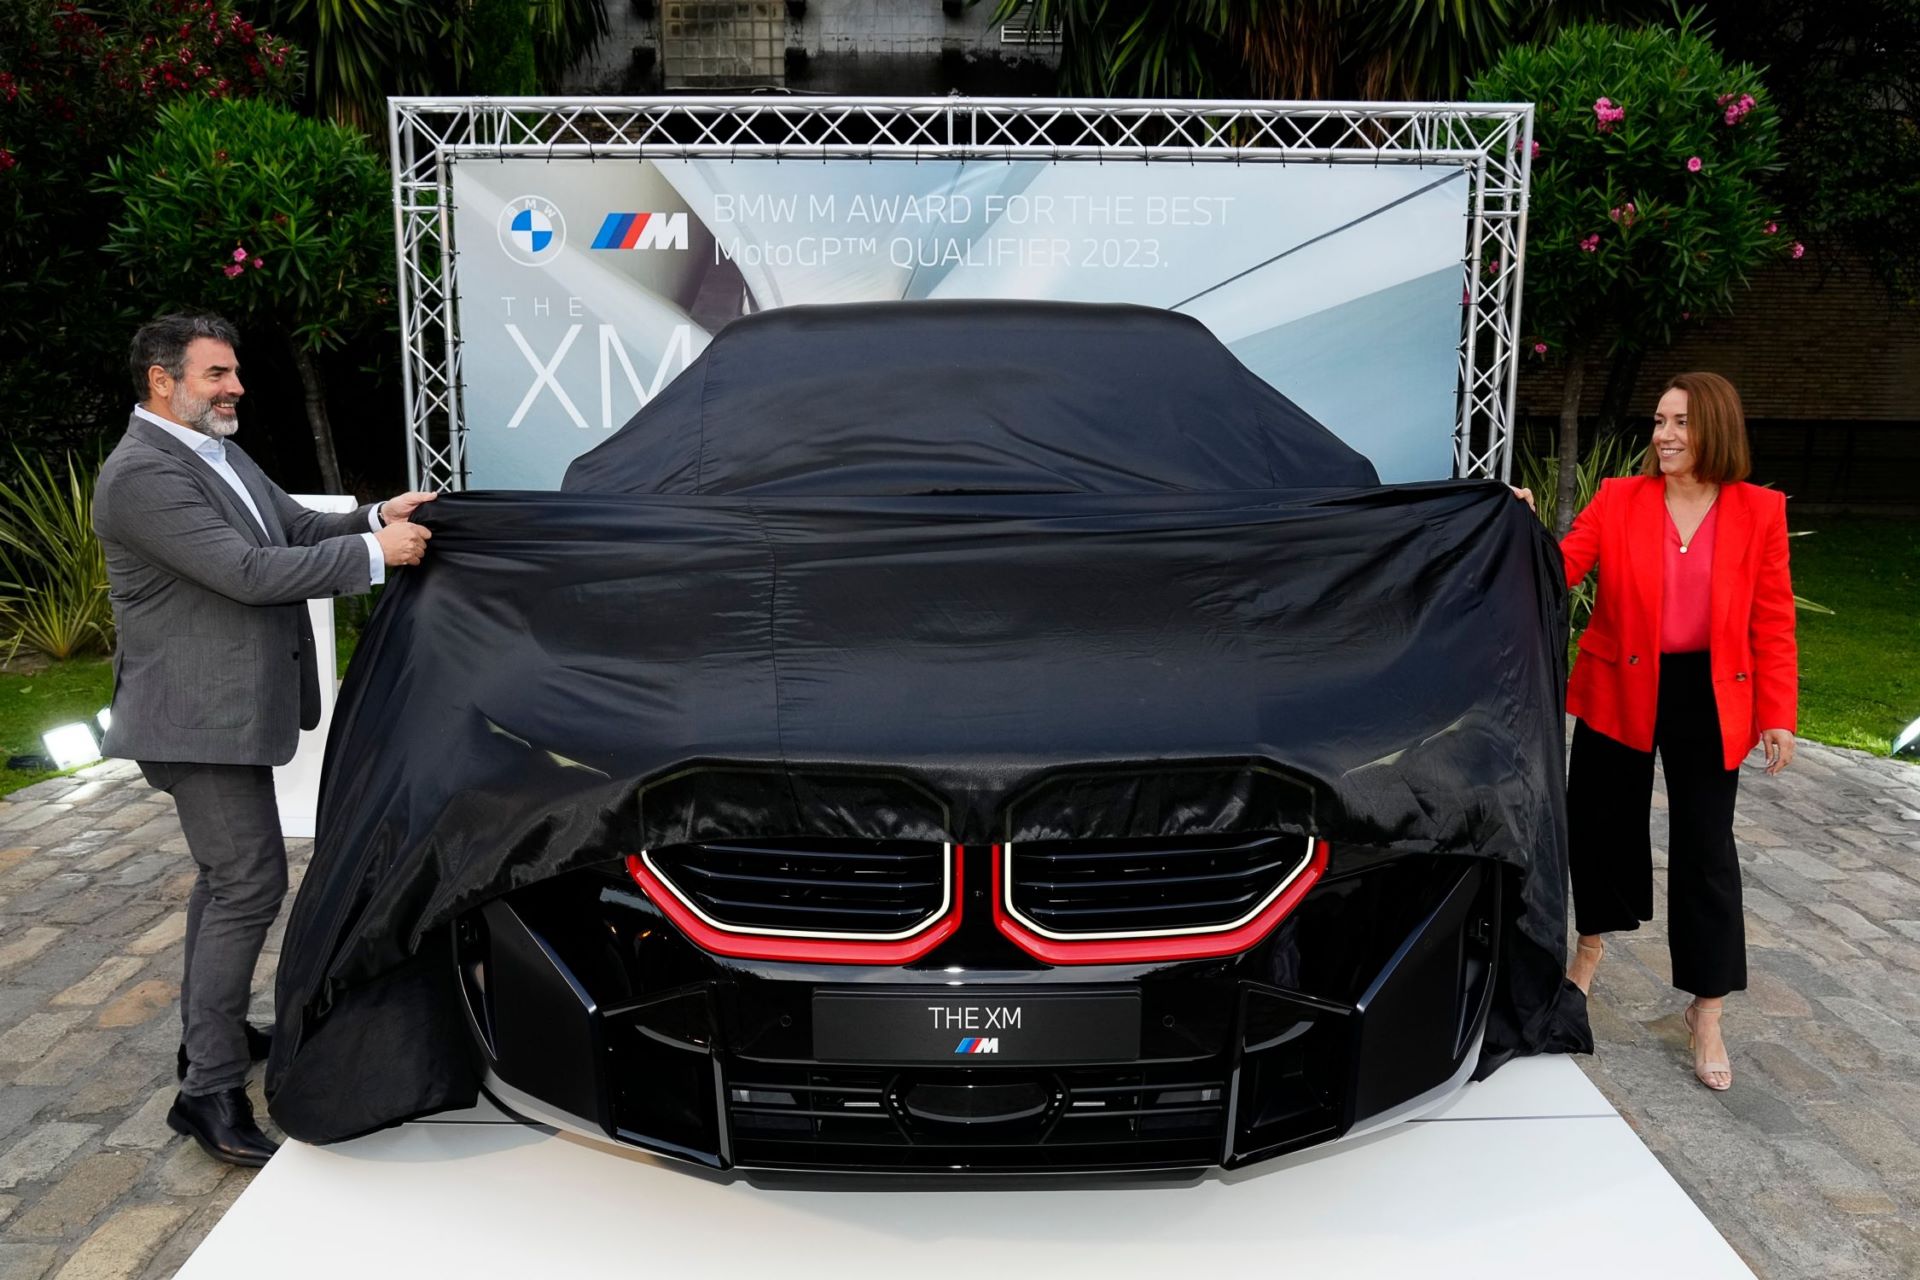 BMW-XM-Label-Red-Moto-GP-M-Award-2023-7